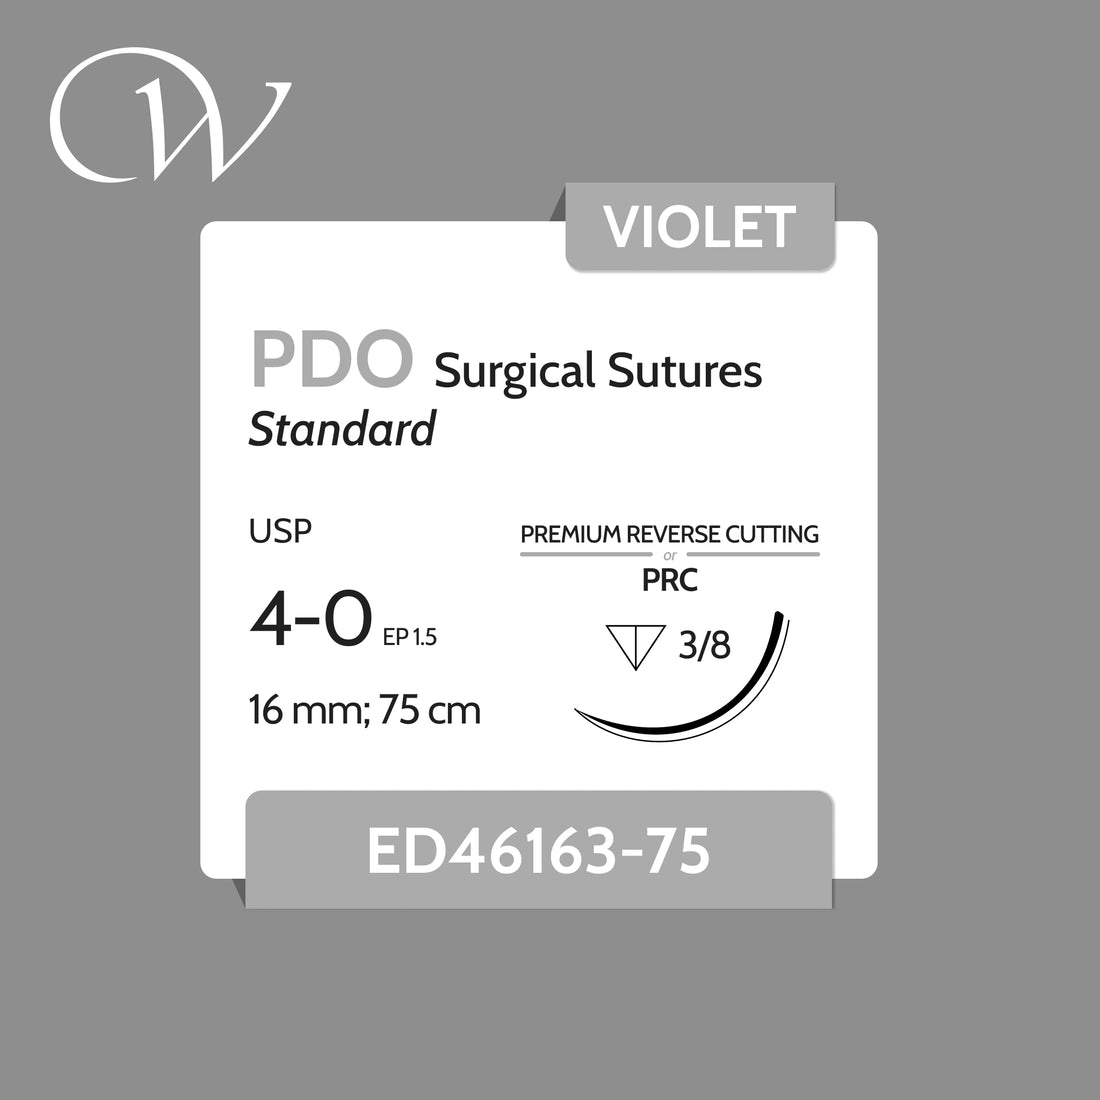 PDO Sutures 4-0, 3/8 PRC | Violet | 16mm; 75cm